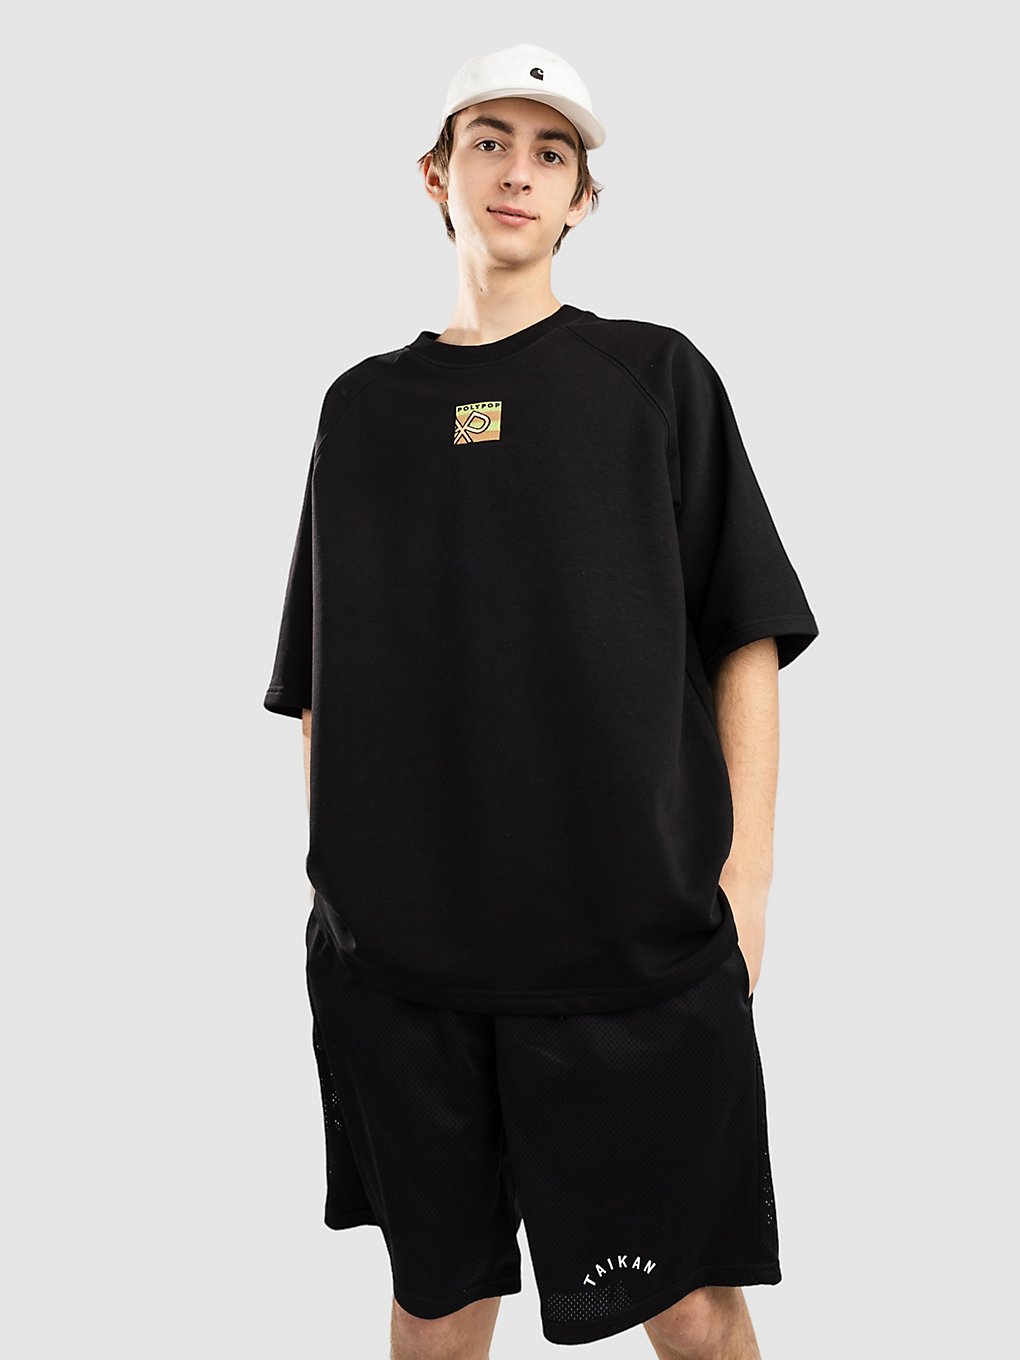 Polypop Square Logo Oversized Fit Heavy T-Shirt black kaufen